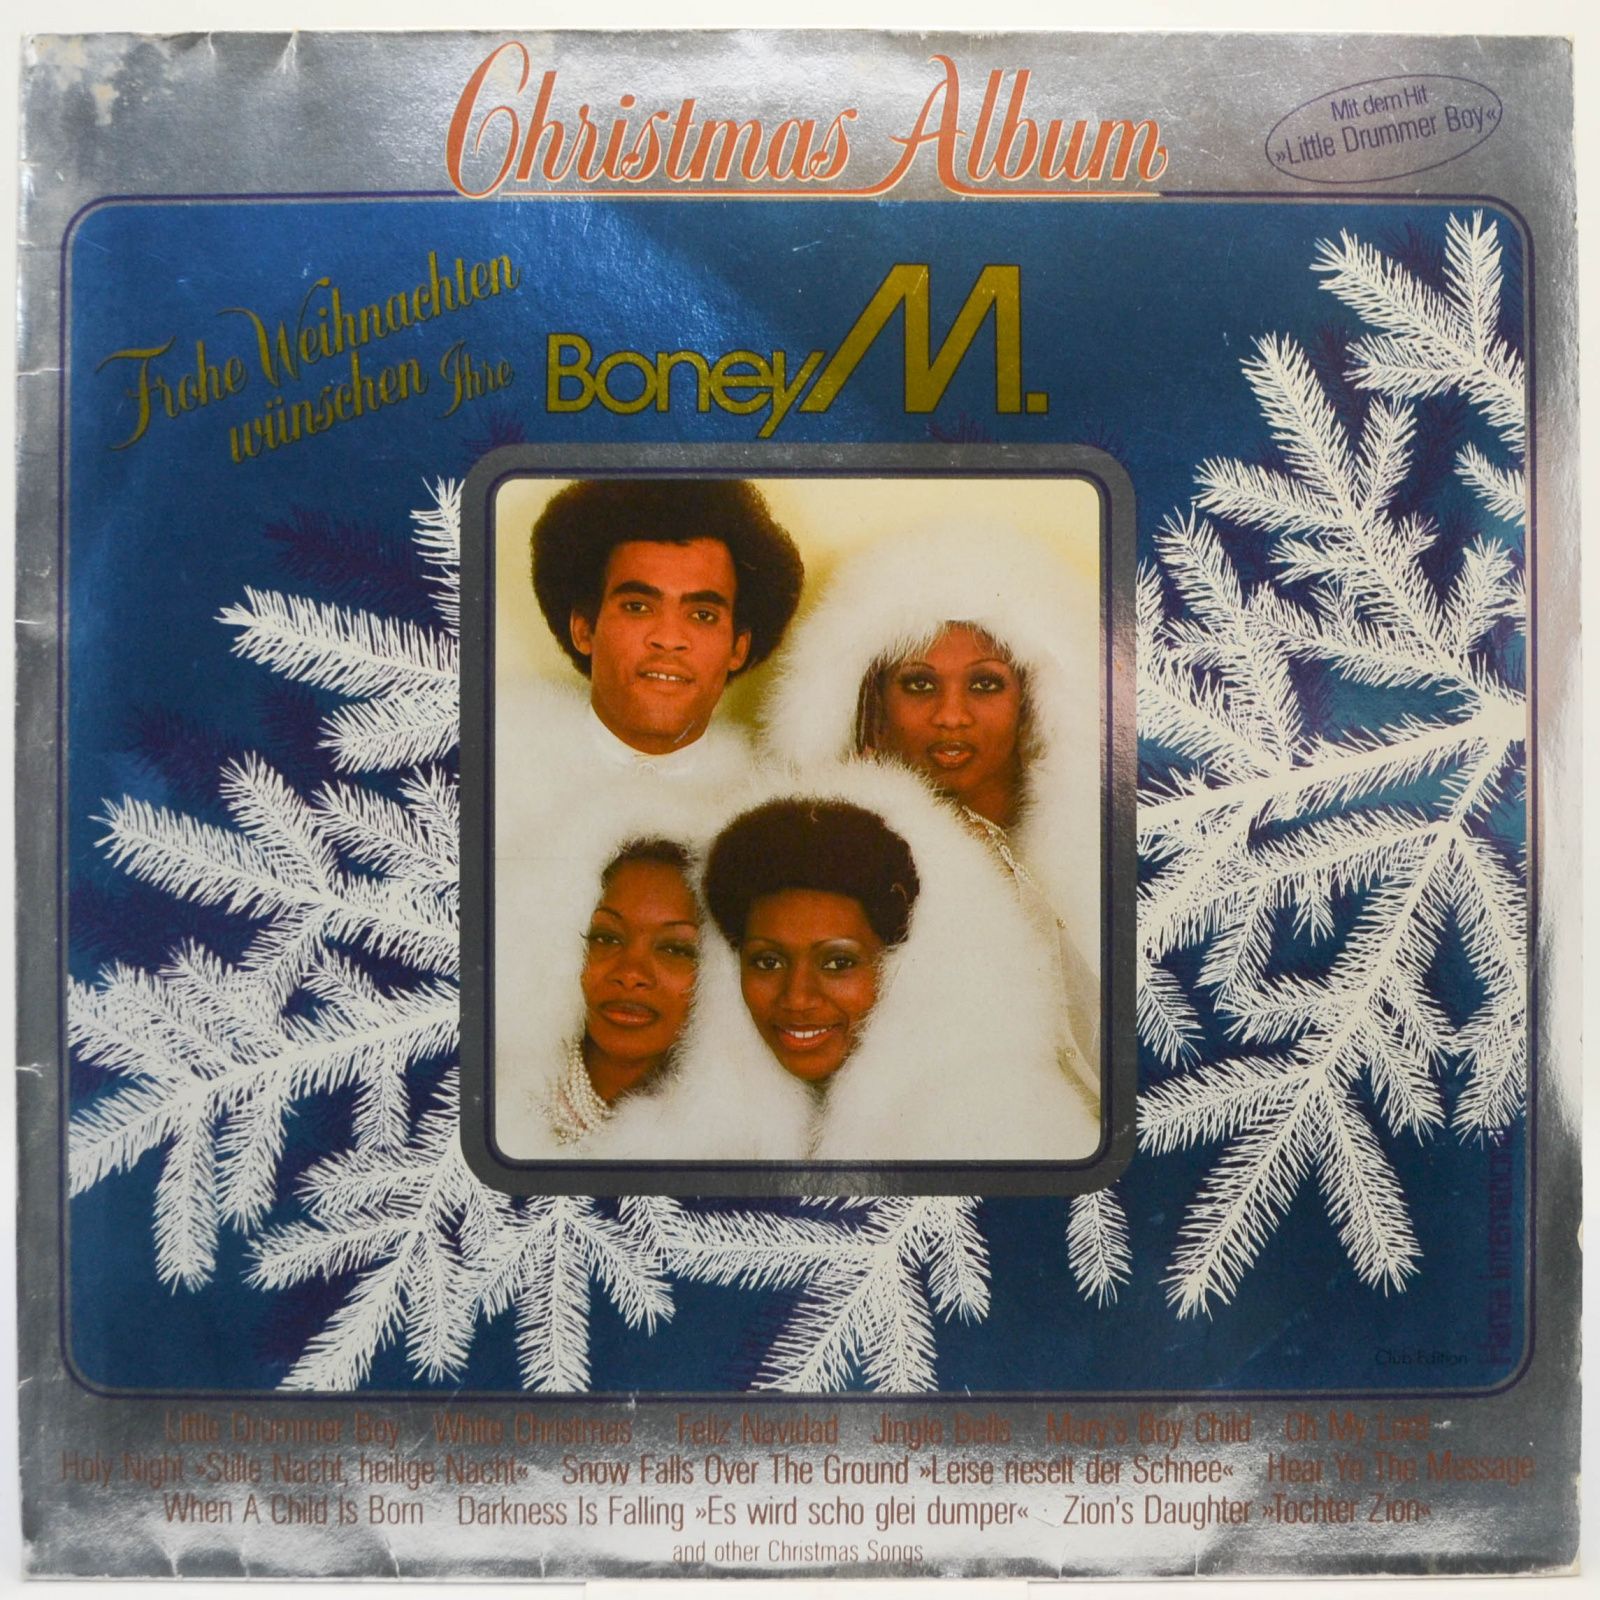 Boney M. — Christmas Album, 1981